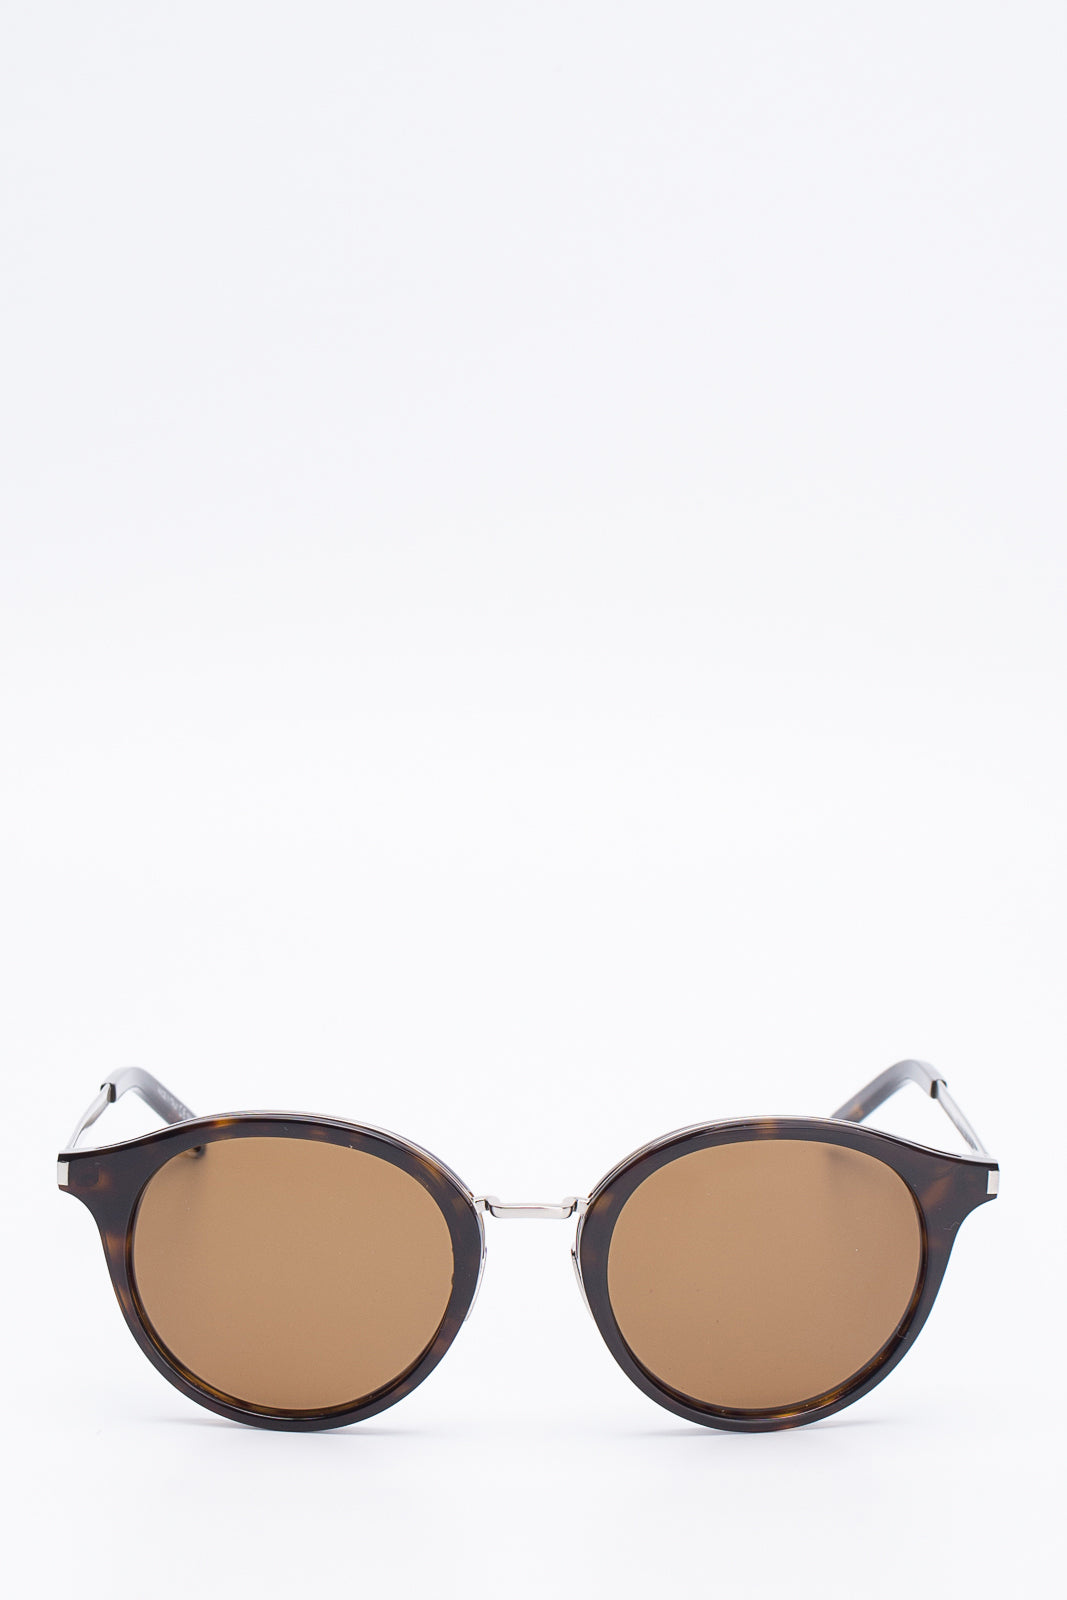 RRP €340 SAINT LAURENT SL57 Round Sunglasses Tortoiseshell Pattern